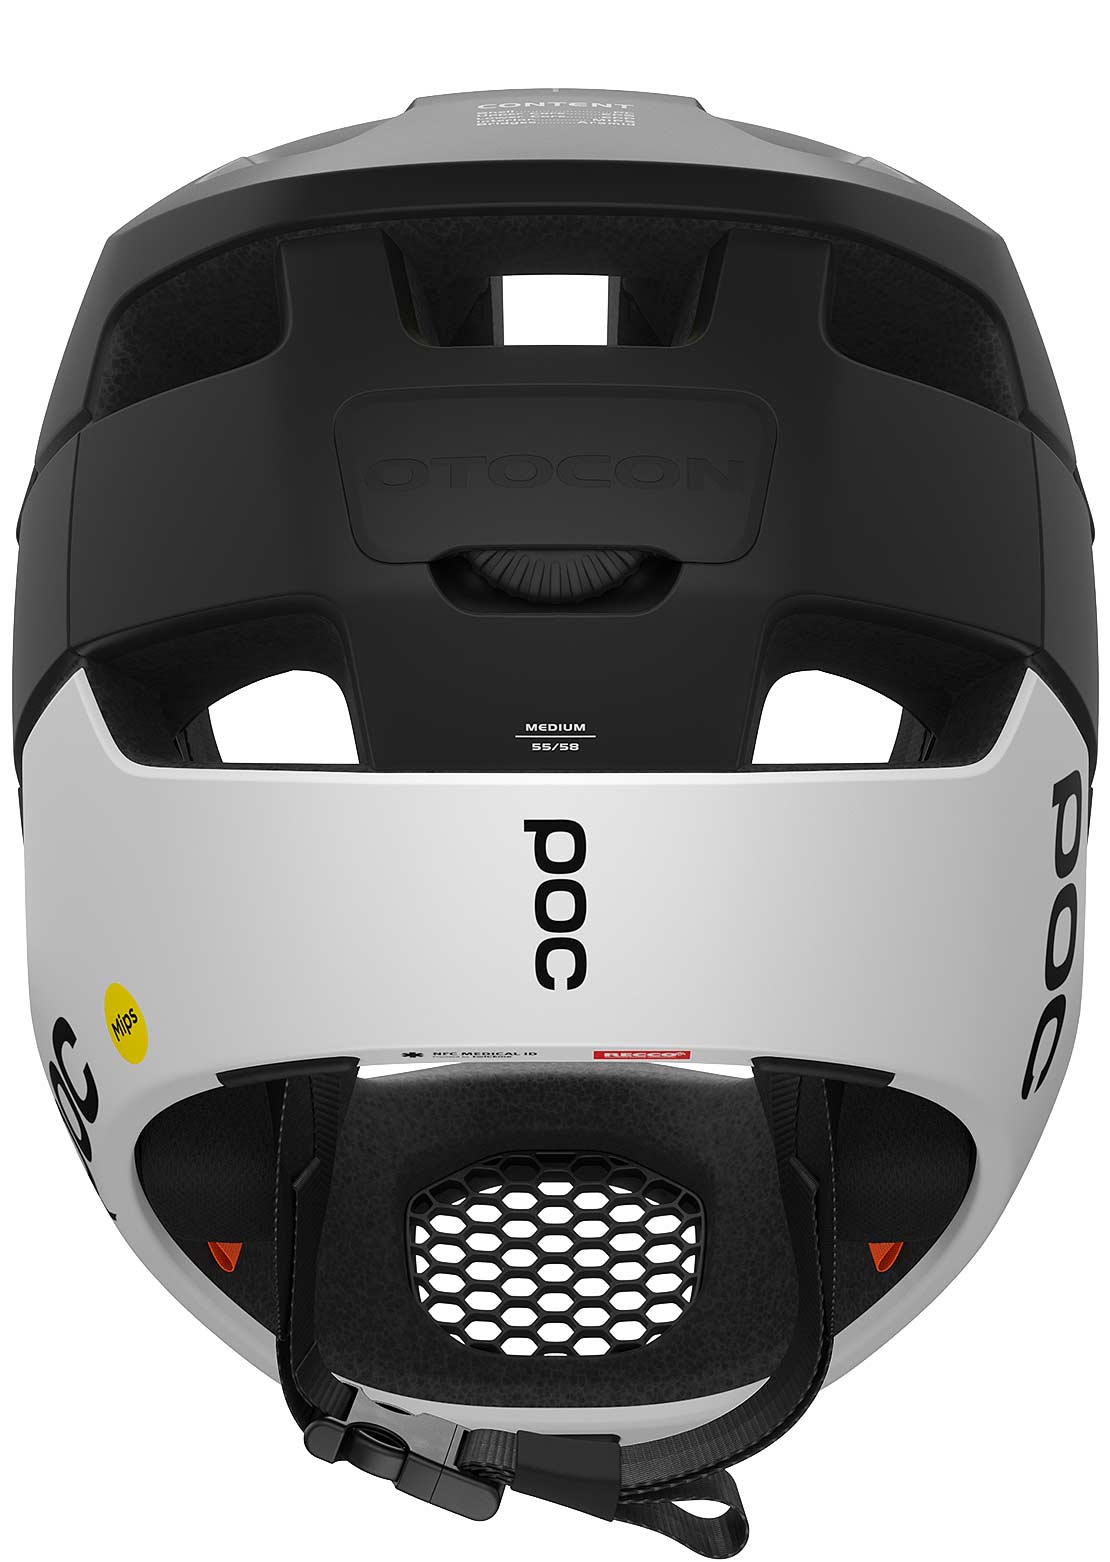 POC Otocon Race MIPS Mountain Bike Helmet Uranium Black/Hydrogen White Matt